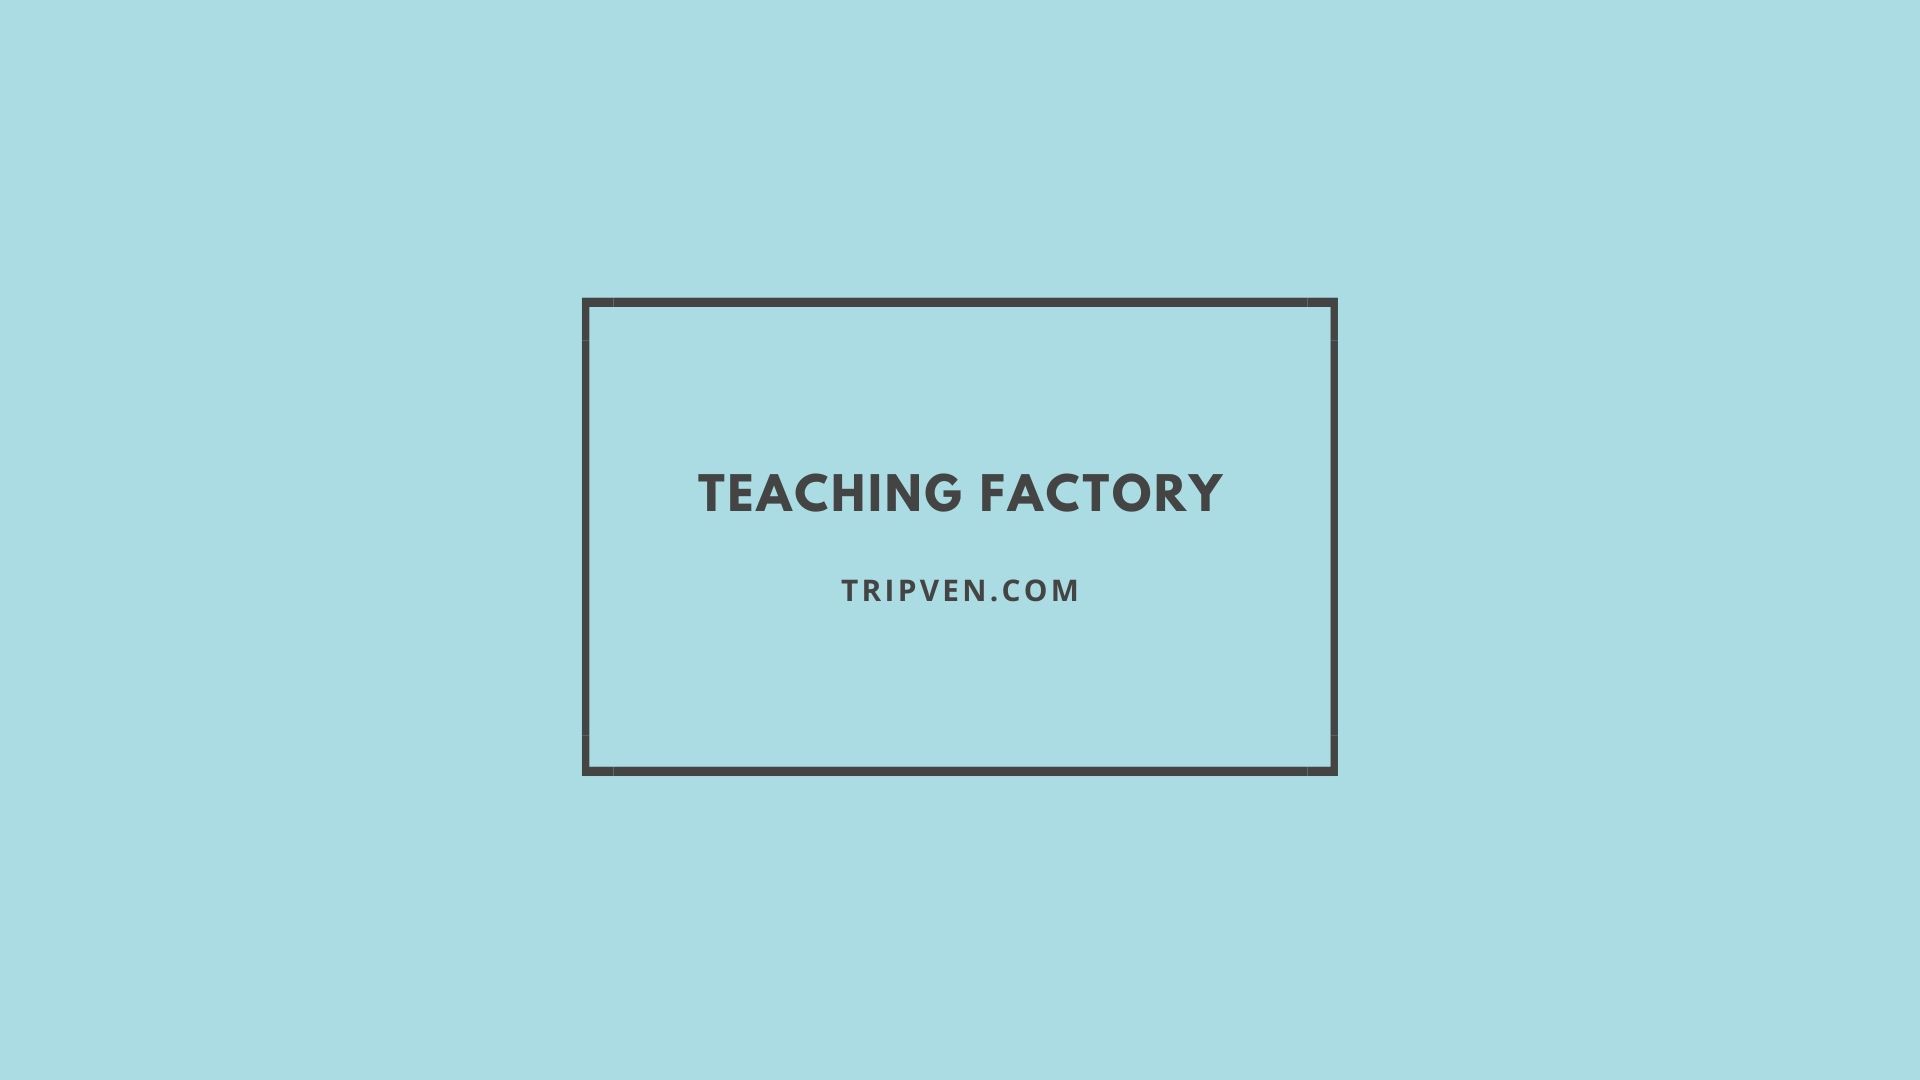 Teaching Factory